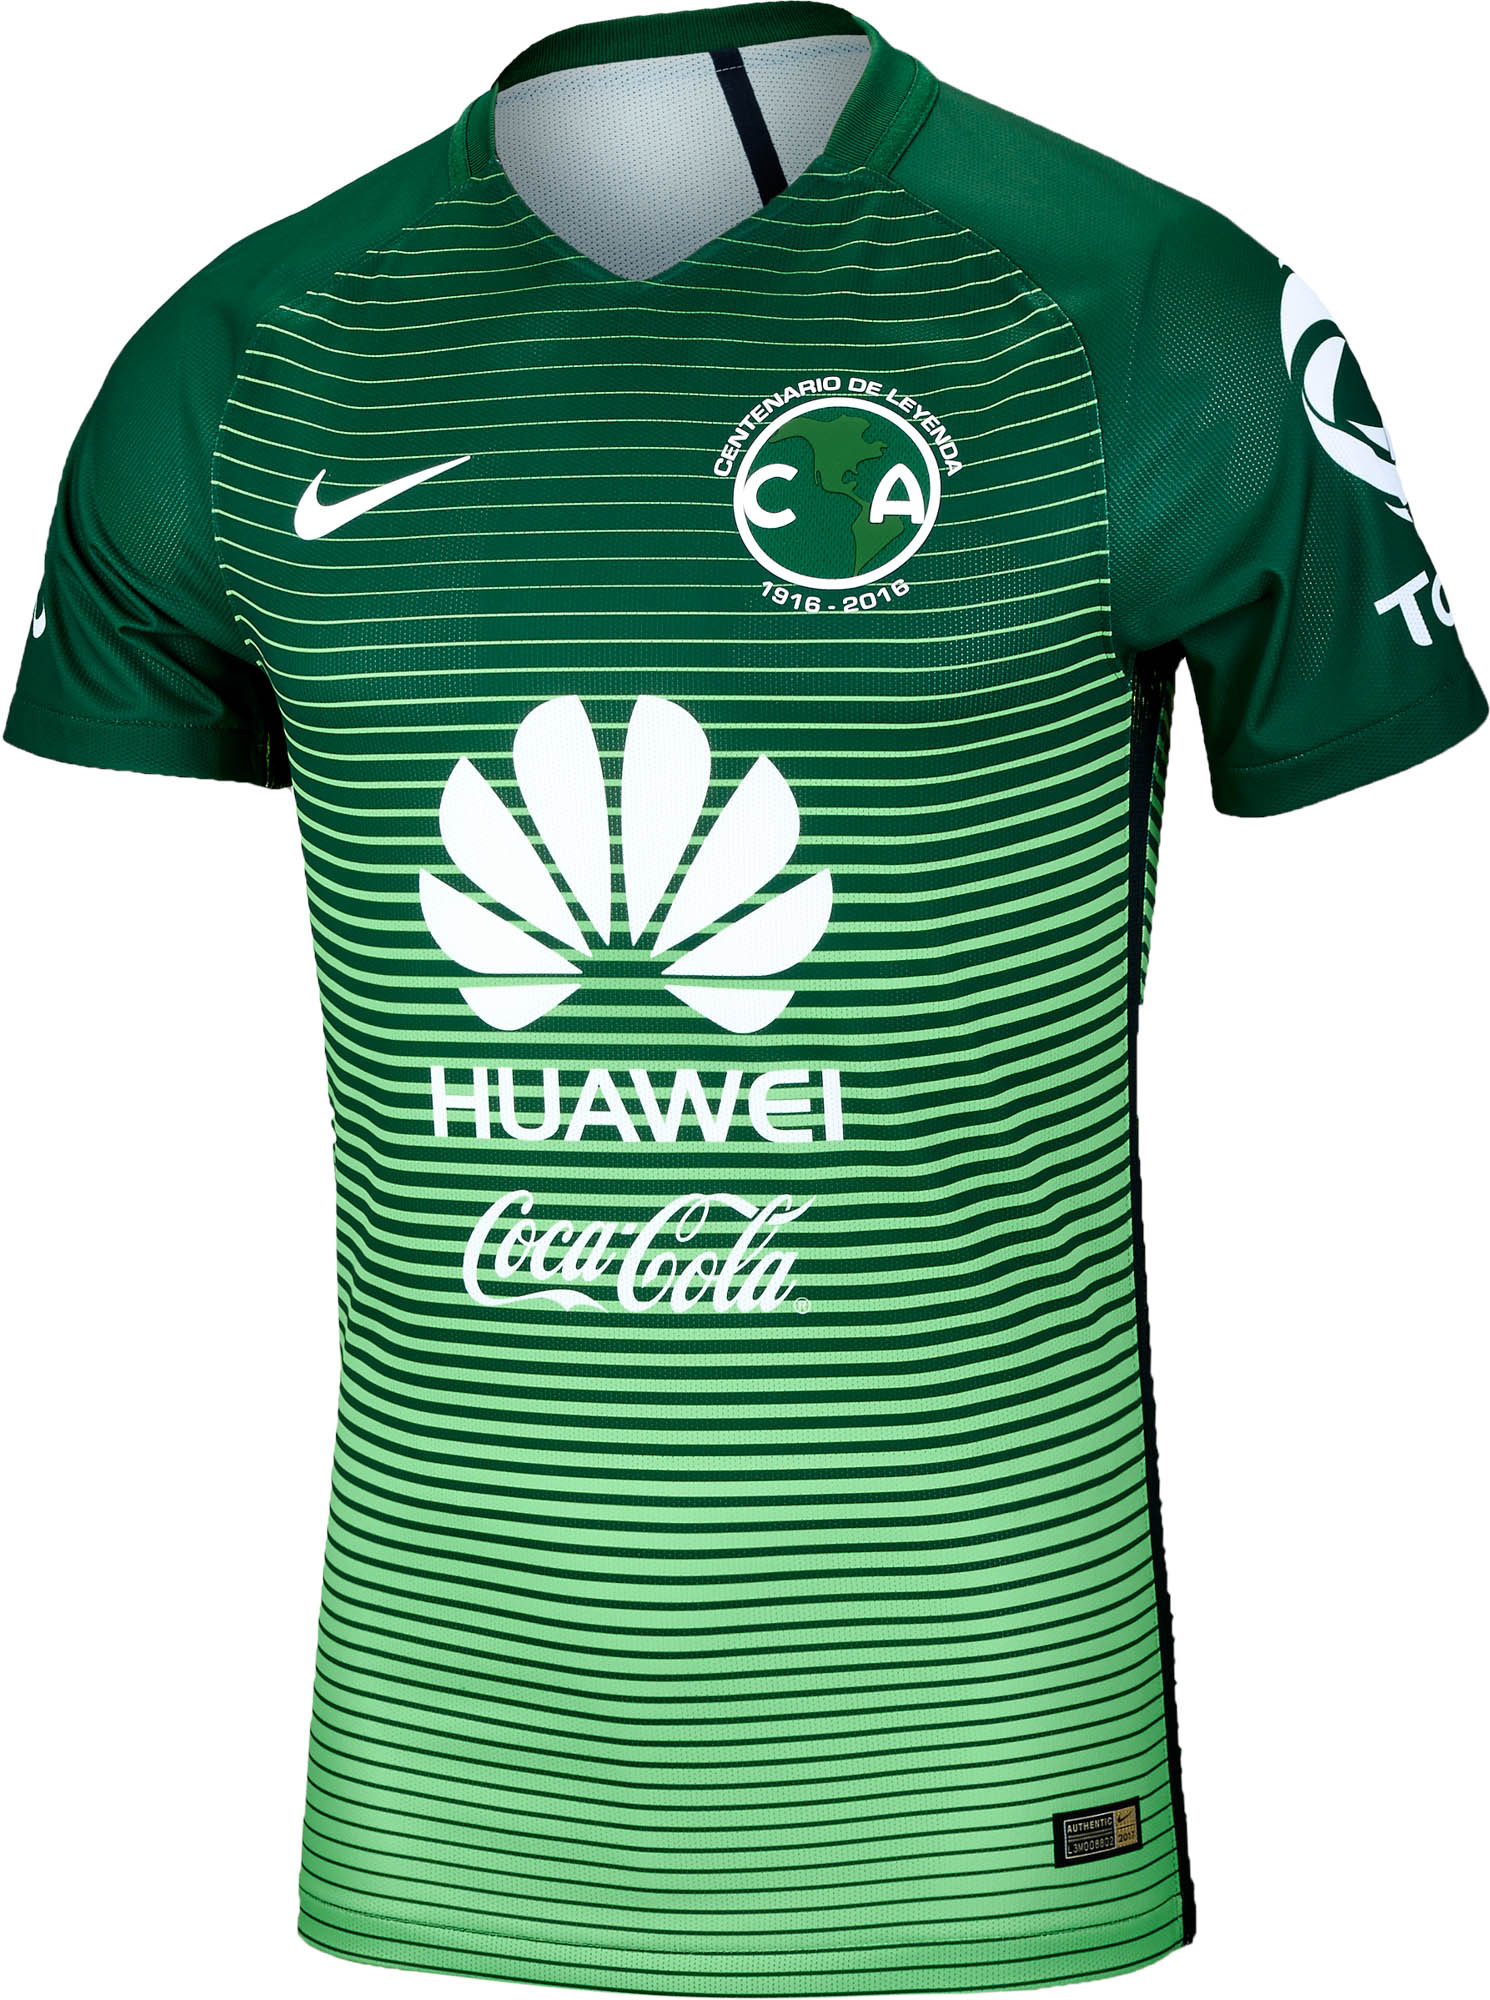 club america green jersey 2018